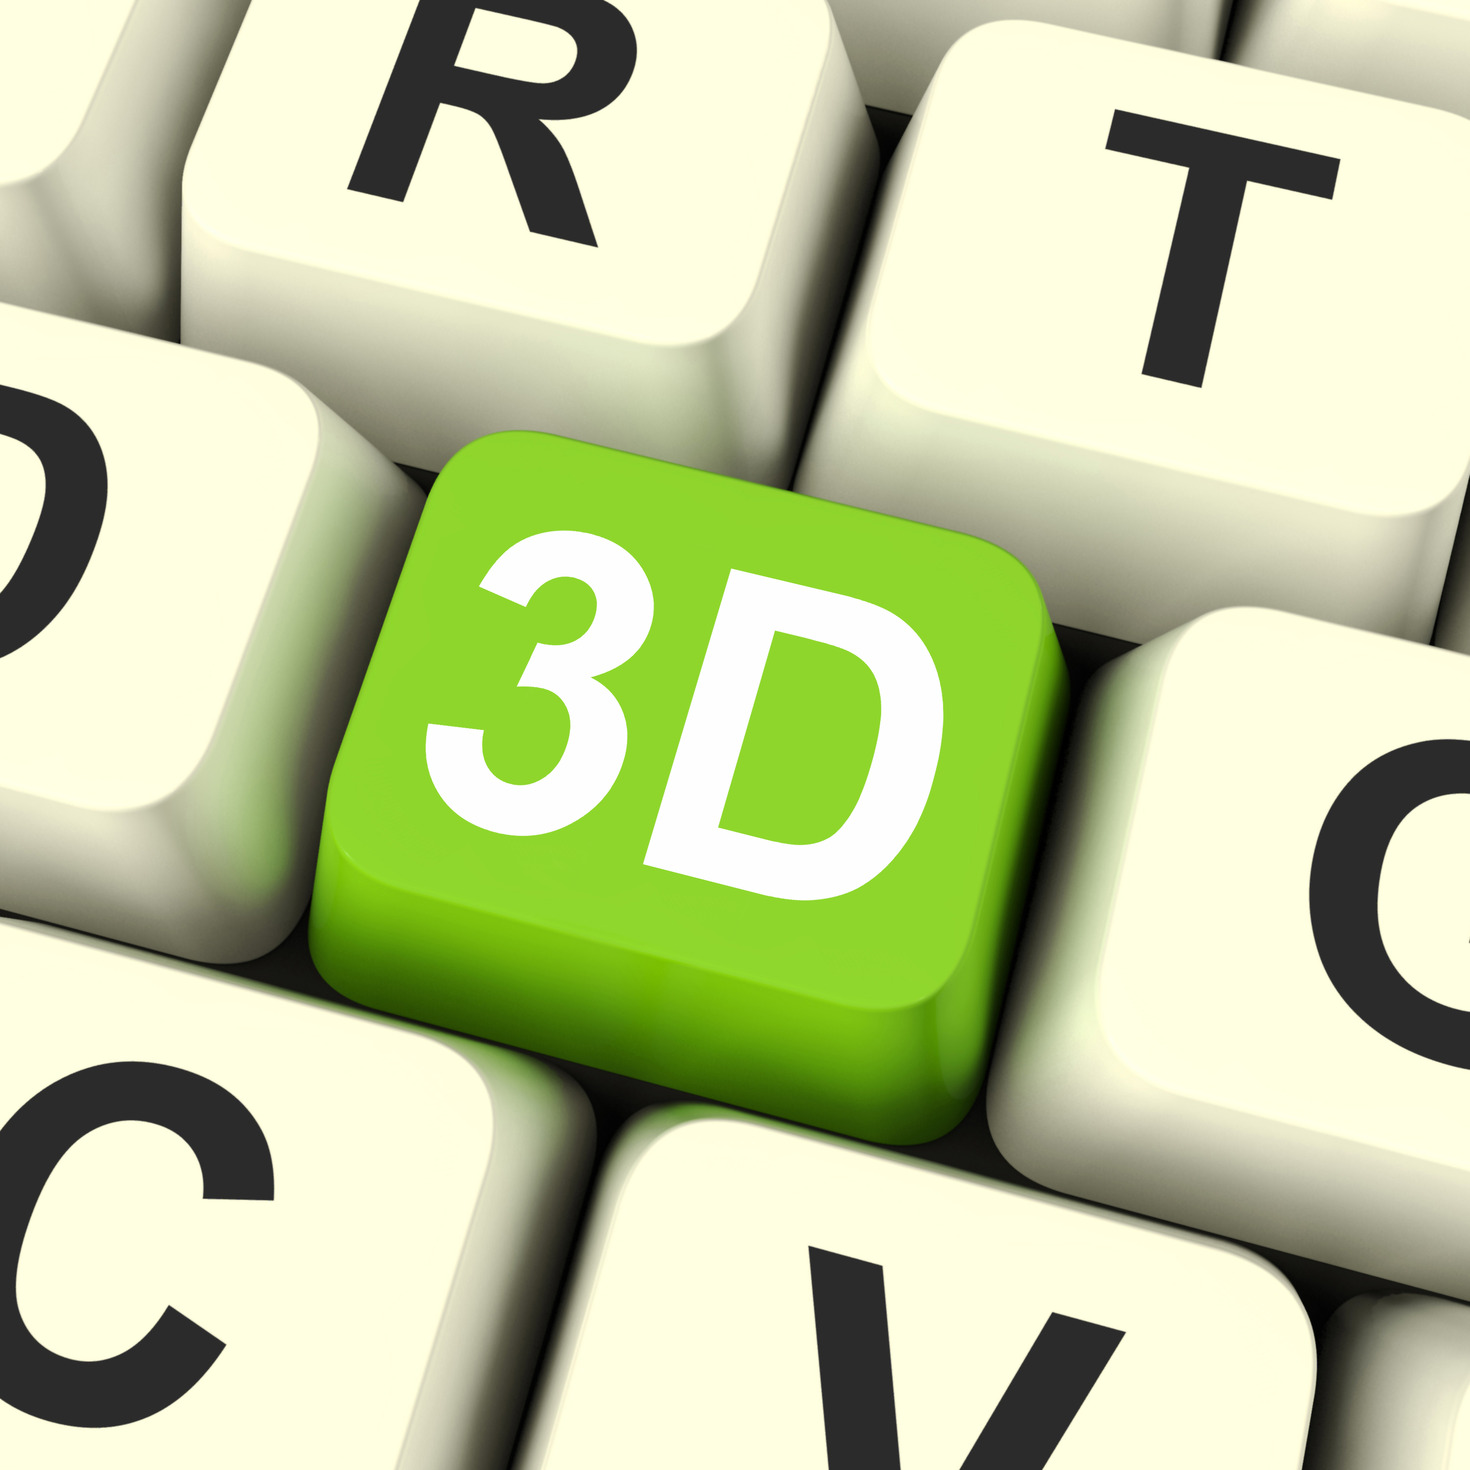 3D 프린터산업 발전계획 발표, 성장률 30% 이상 전망